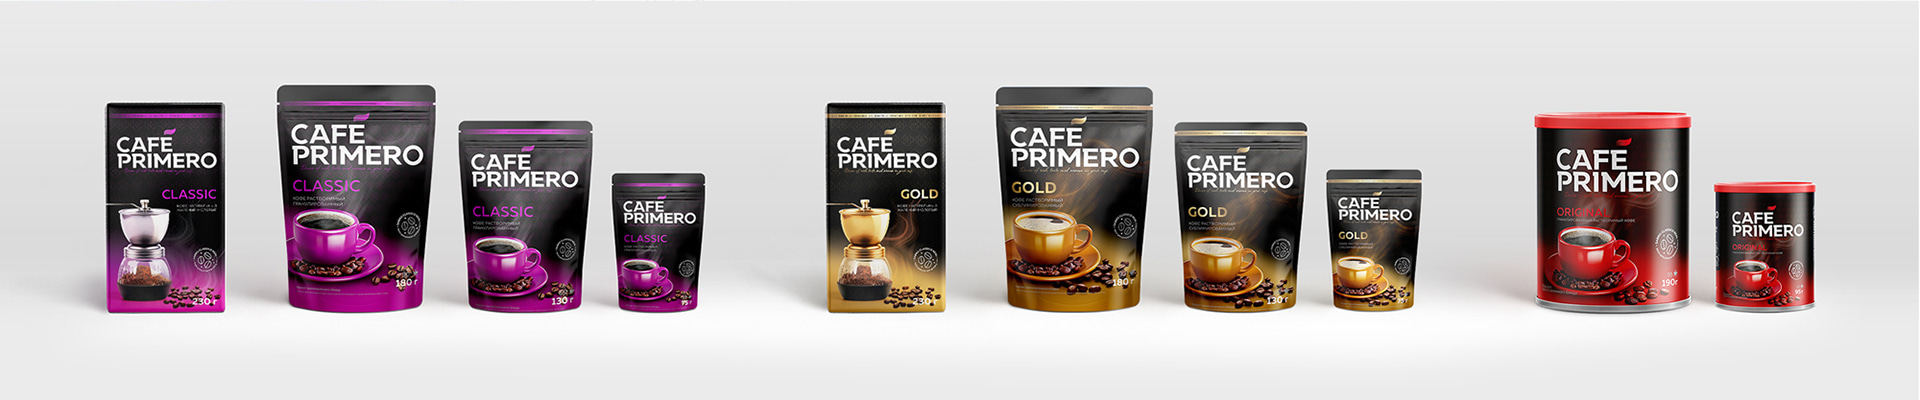 Cafe Primero image